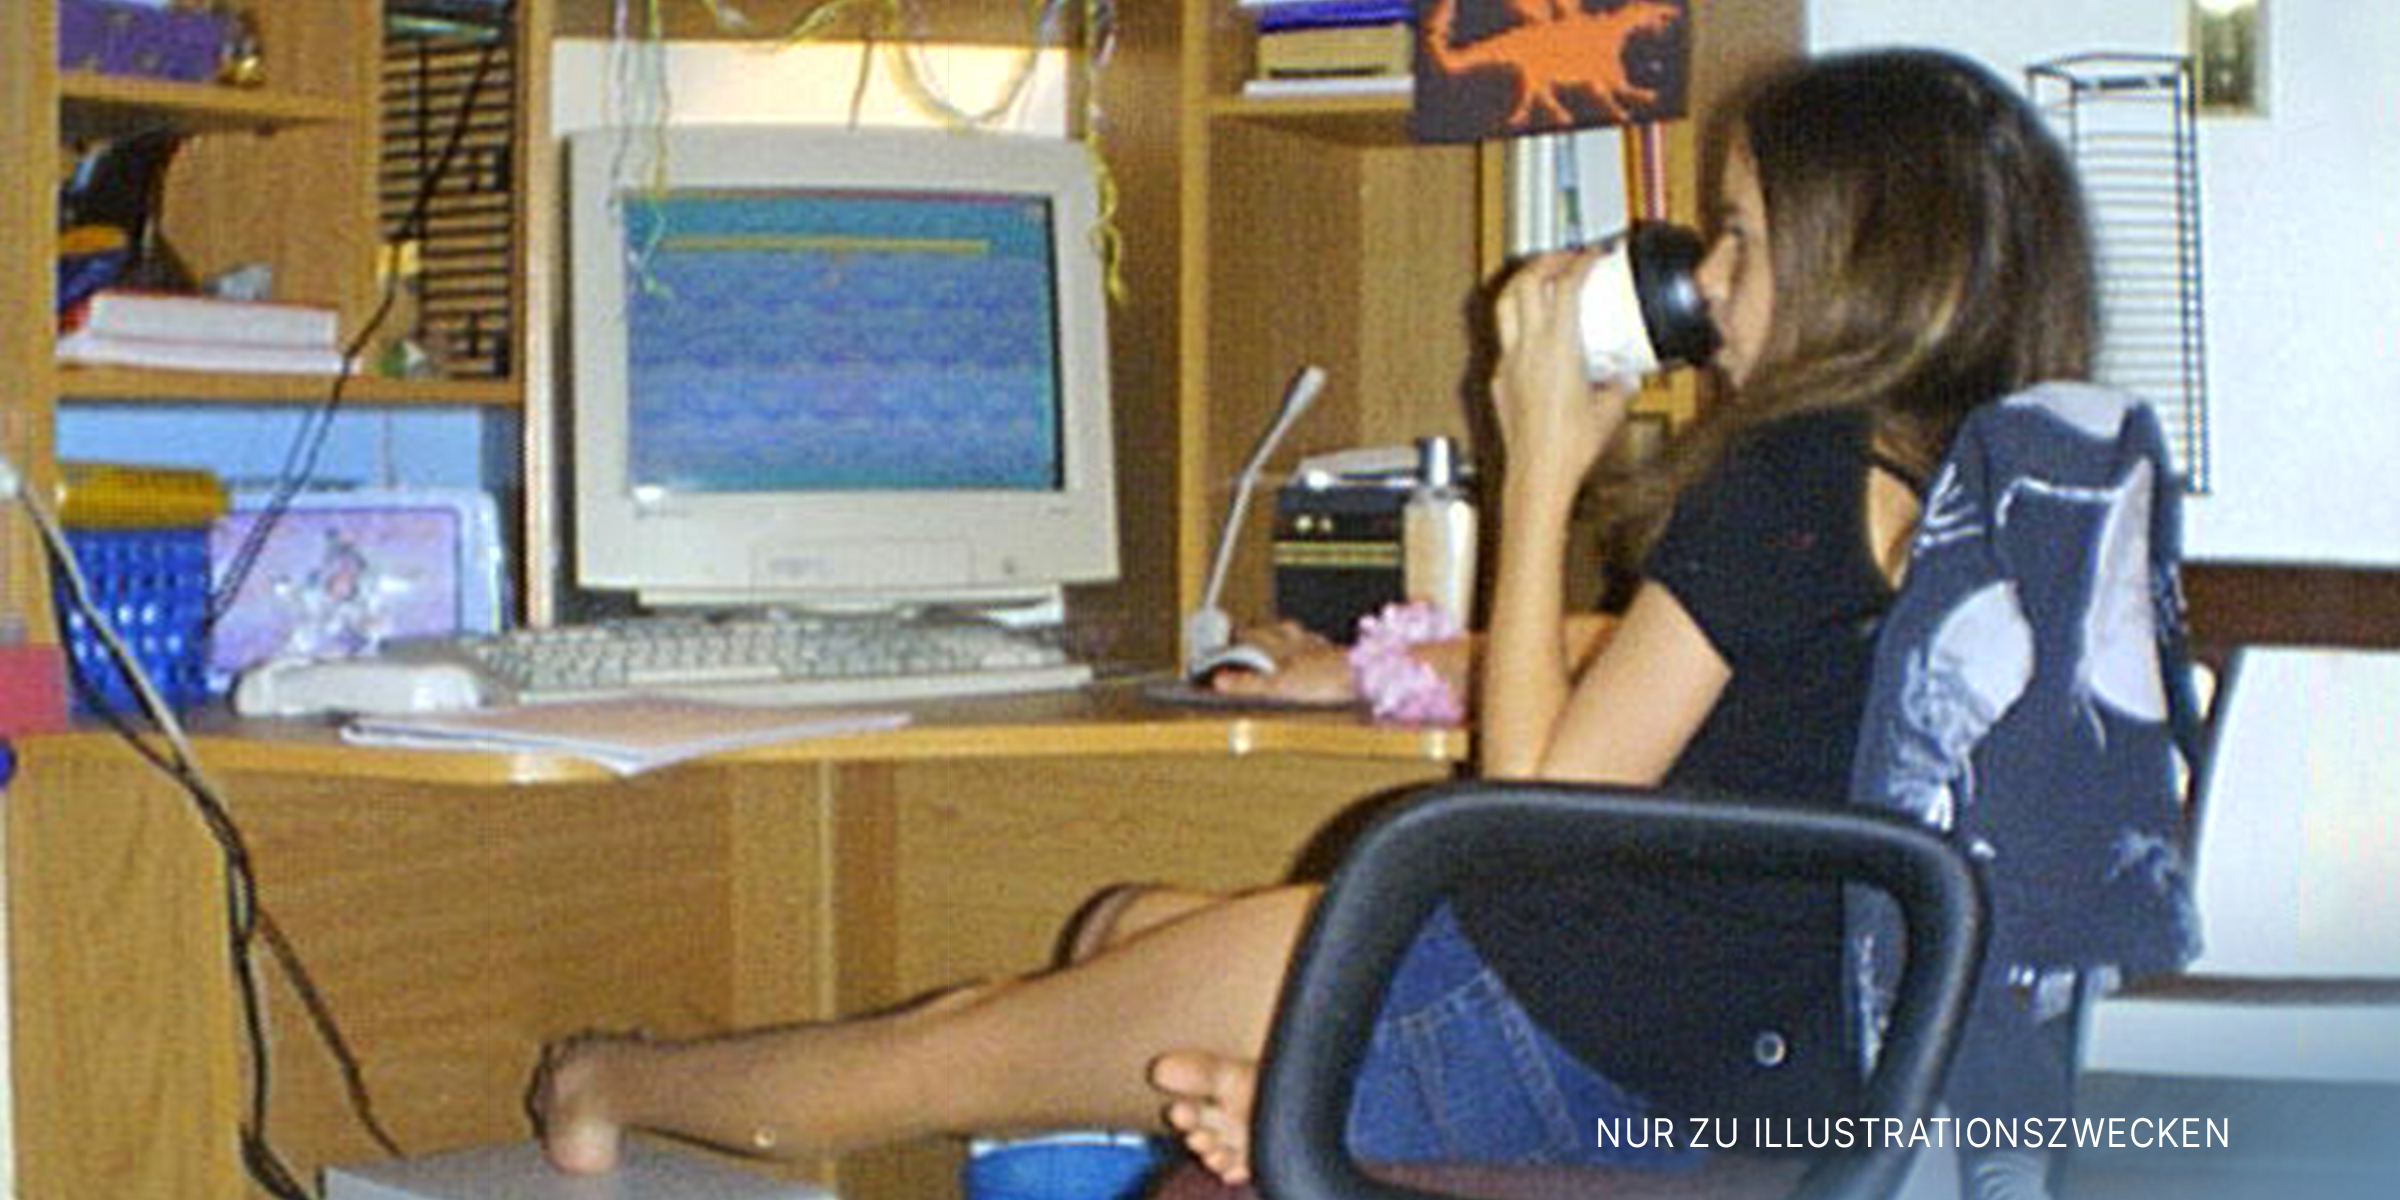 Teenagerin am Computer | Quelle: Flickr